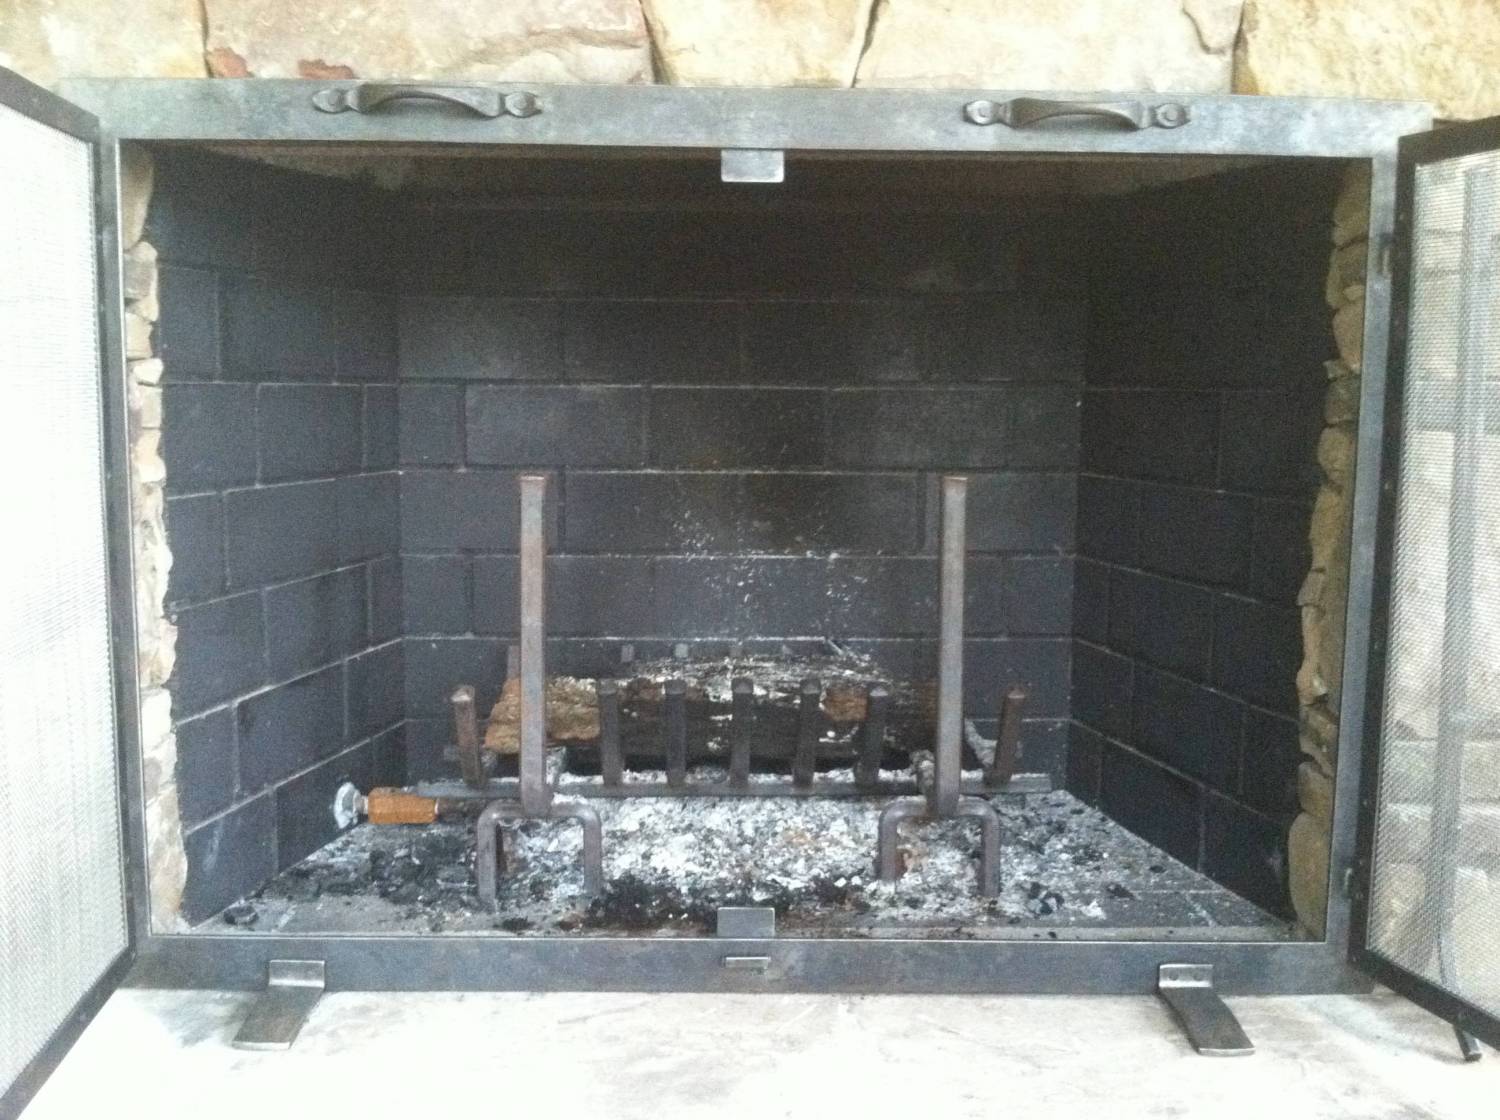 fireplace screen mounted